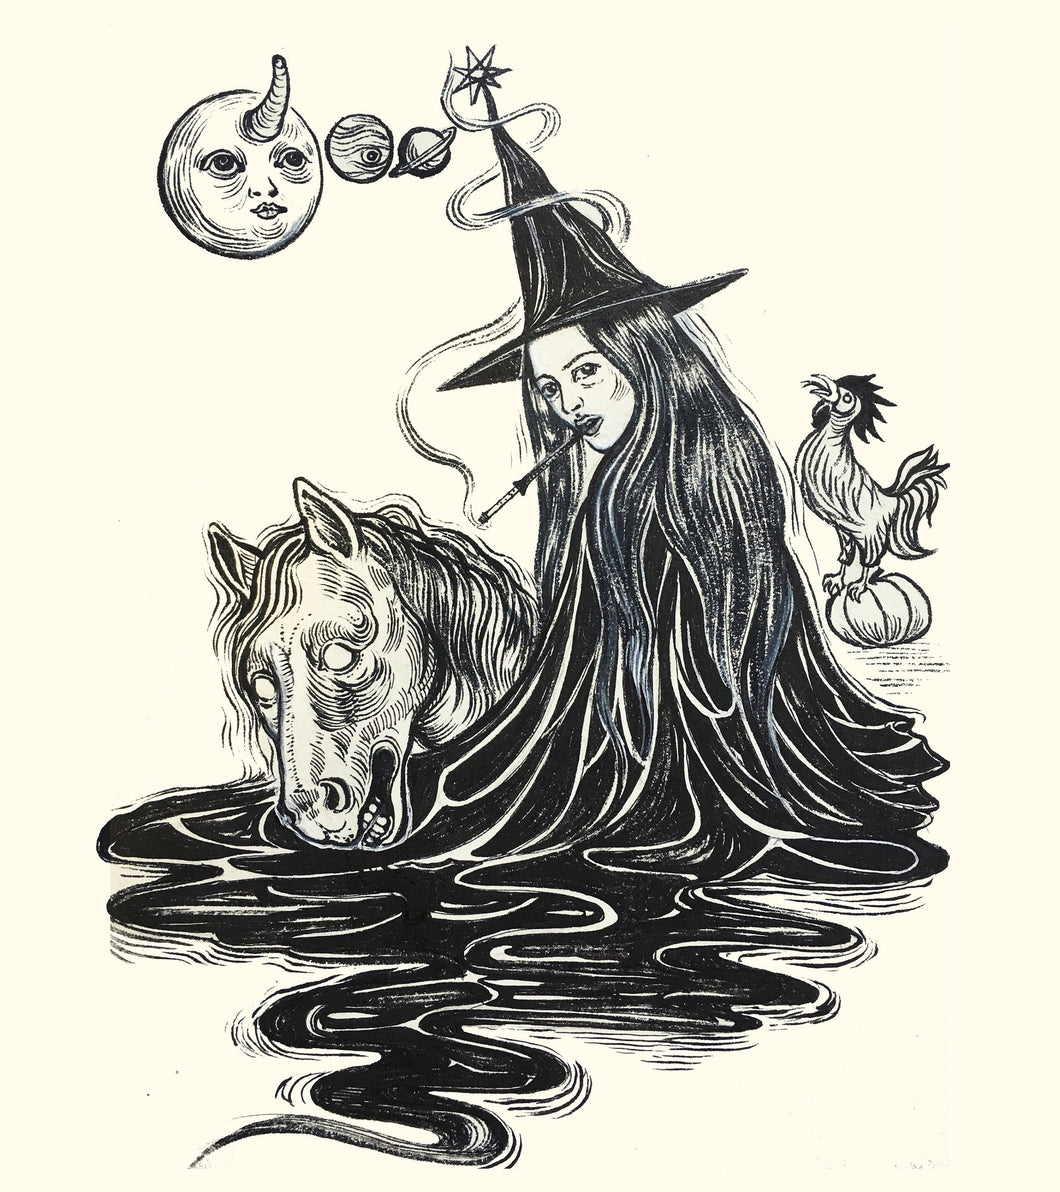 Upir, Obur, Ubir Witch with her dead horse, Ink on Paper, 21x30 cm, Original ink drawing, Halloween Art